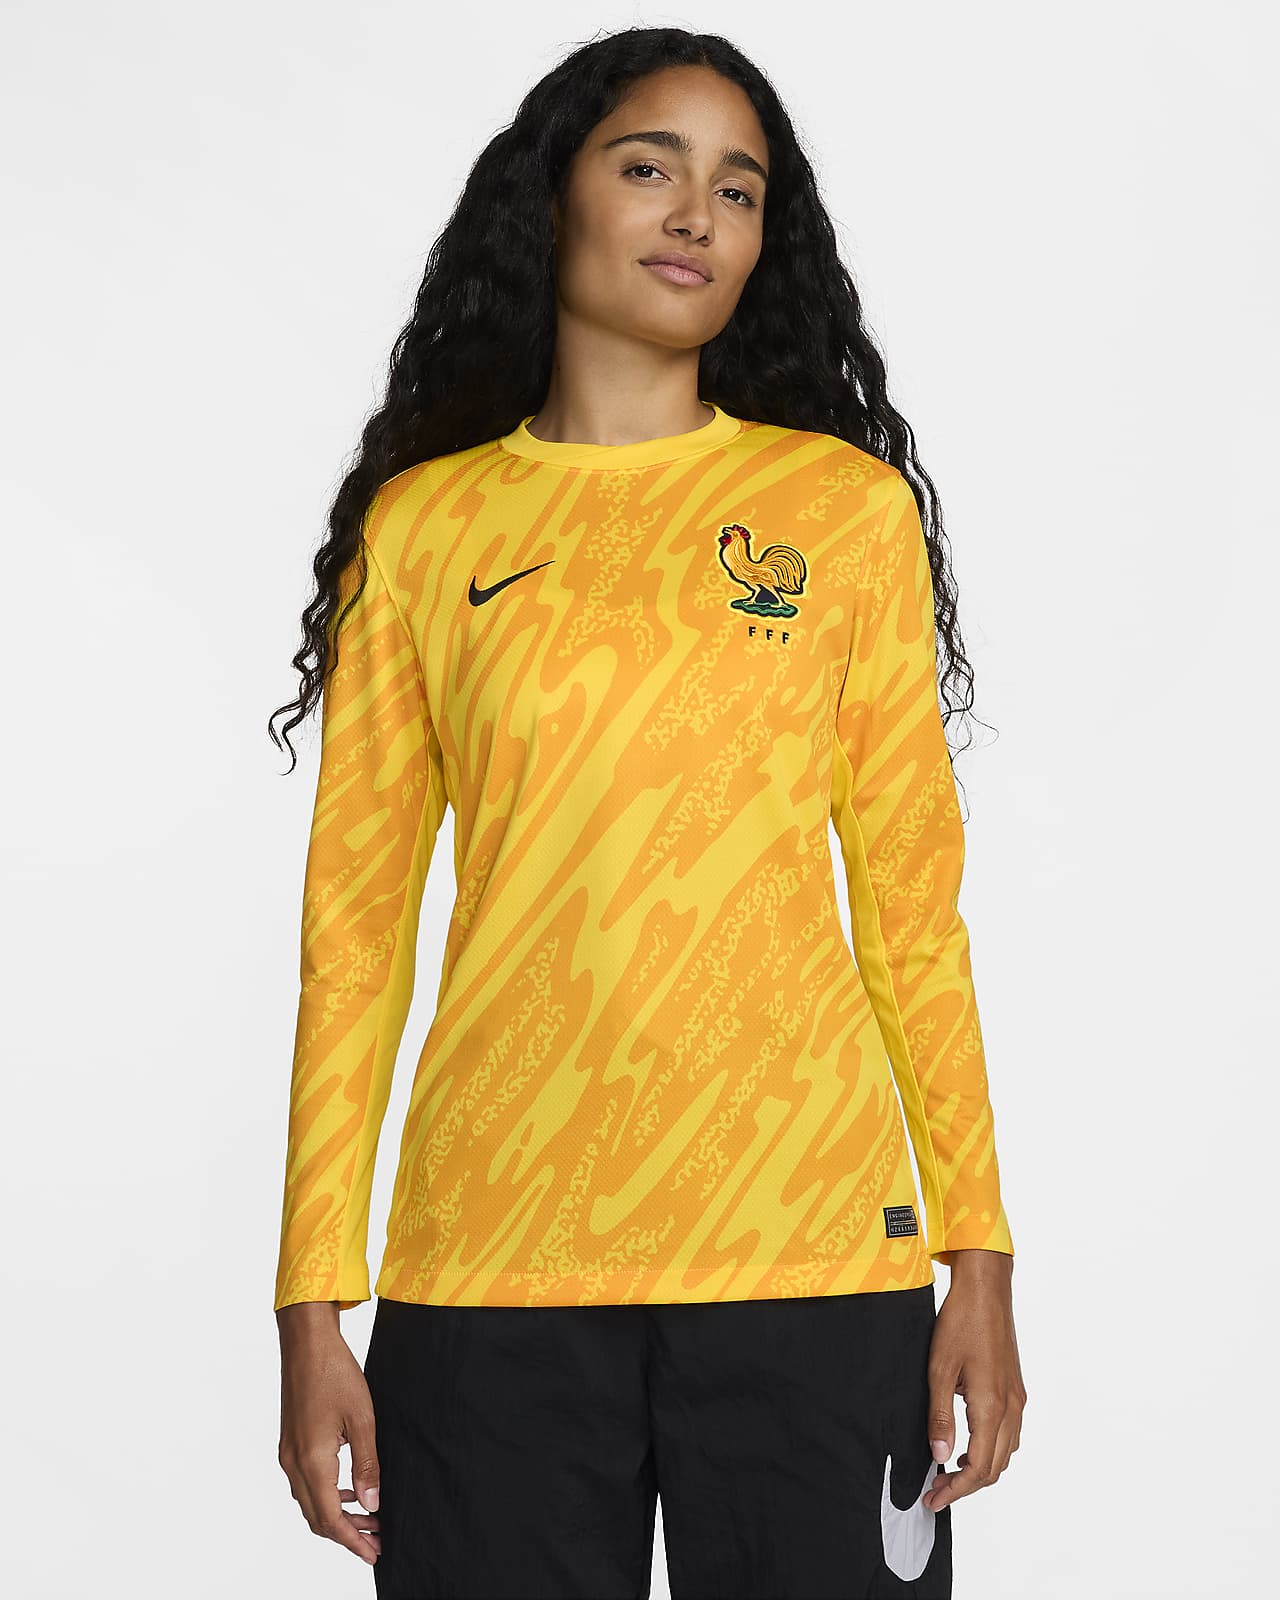 FFF (Women's Team) 2024/25 Stadium Goalkeeper Women's Nike Dri-FIT Football Replica Shirt